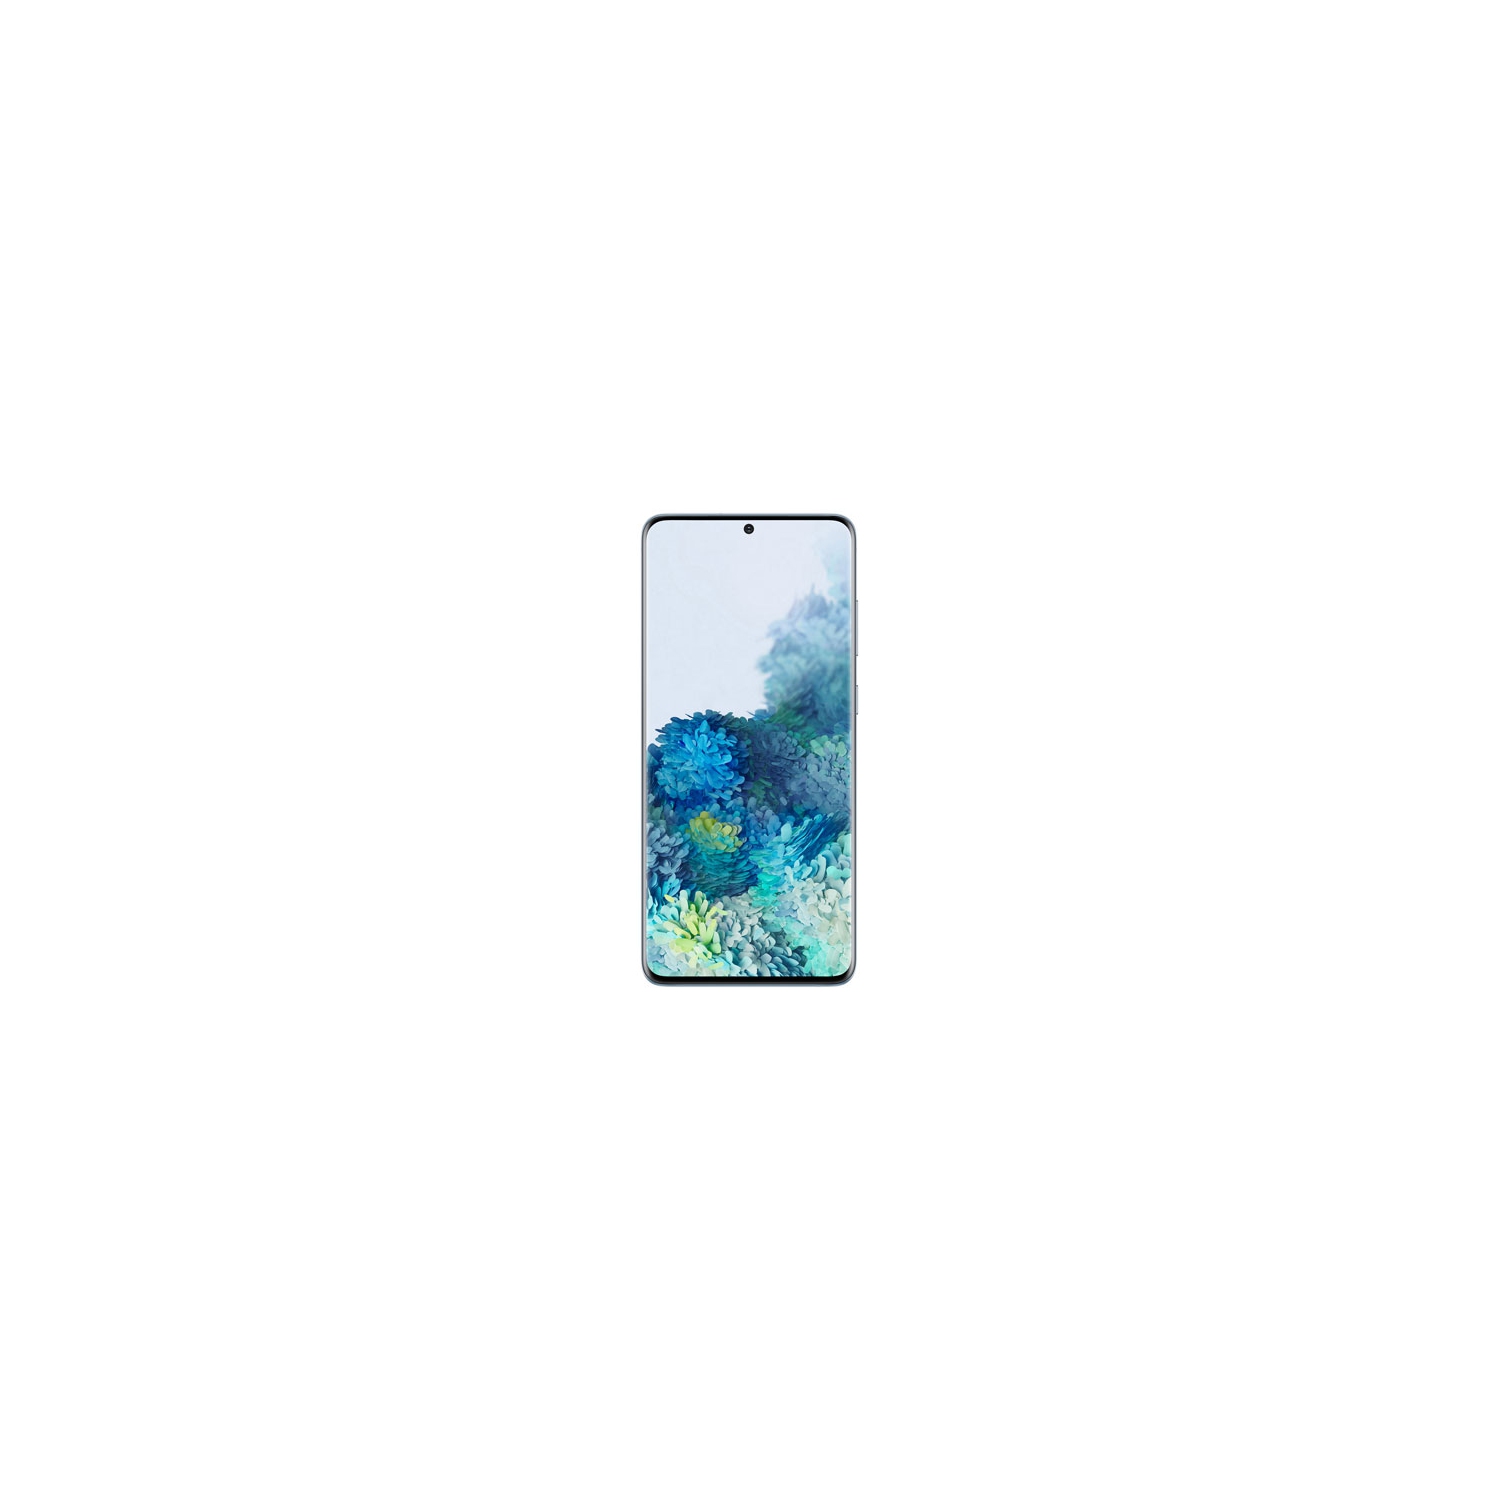 Refurbished (Good) - Samsung Galaxy S20+ (Plus) 5G 128GB Smartphone - Cloud Blue - Unlocked